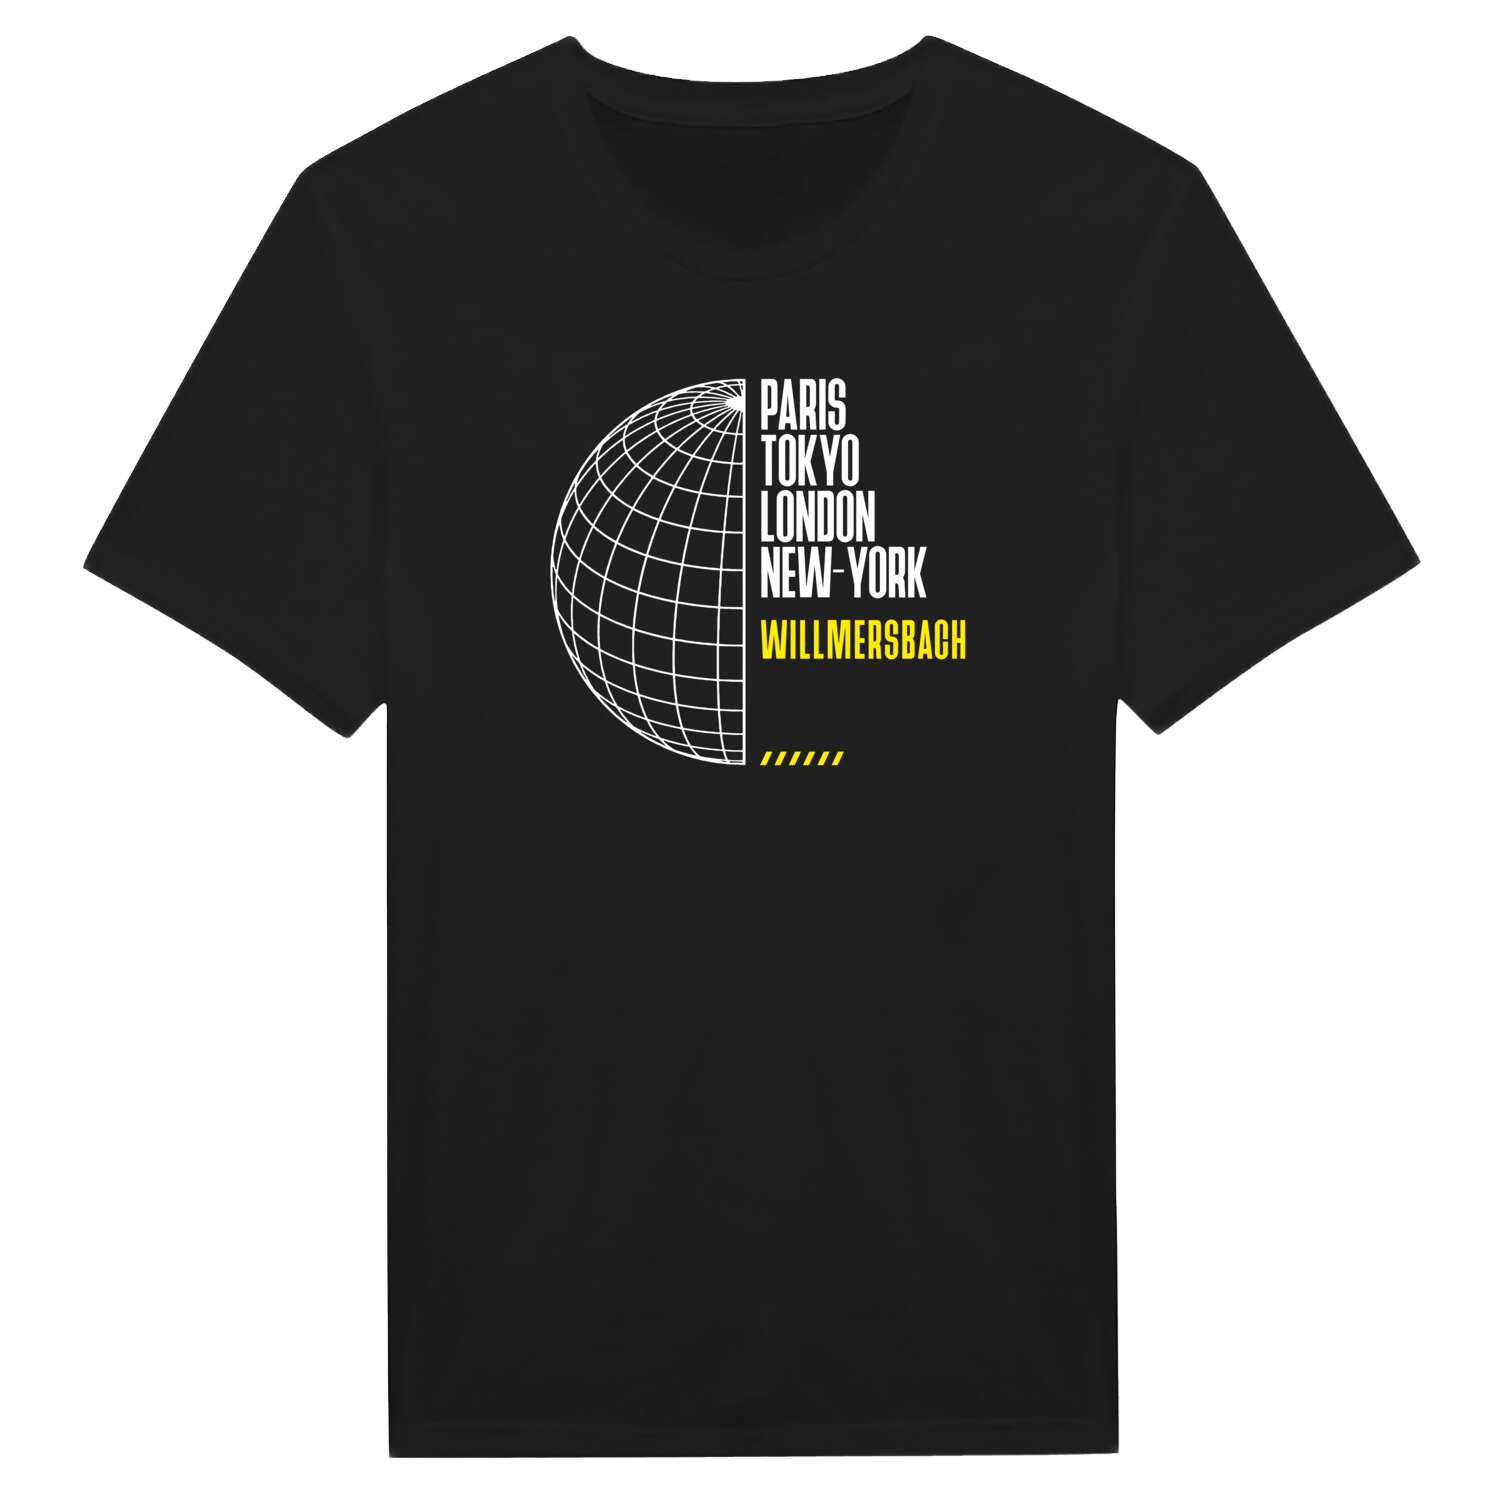 Willmersbach T-Shirt »Paris Tokyo London«